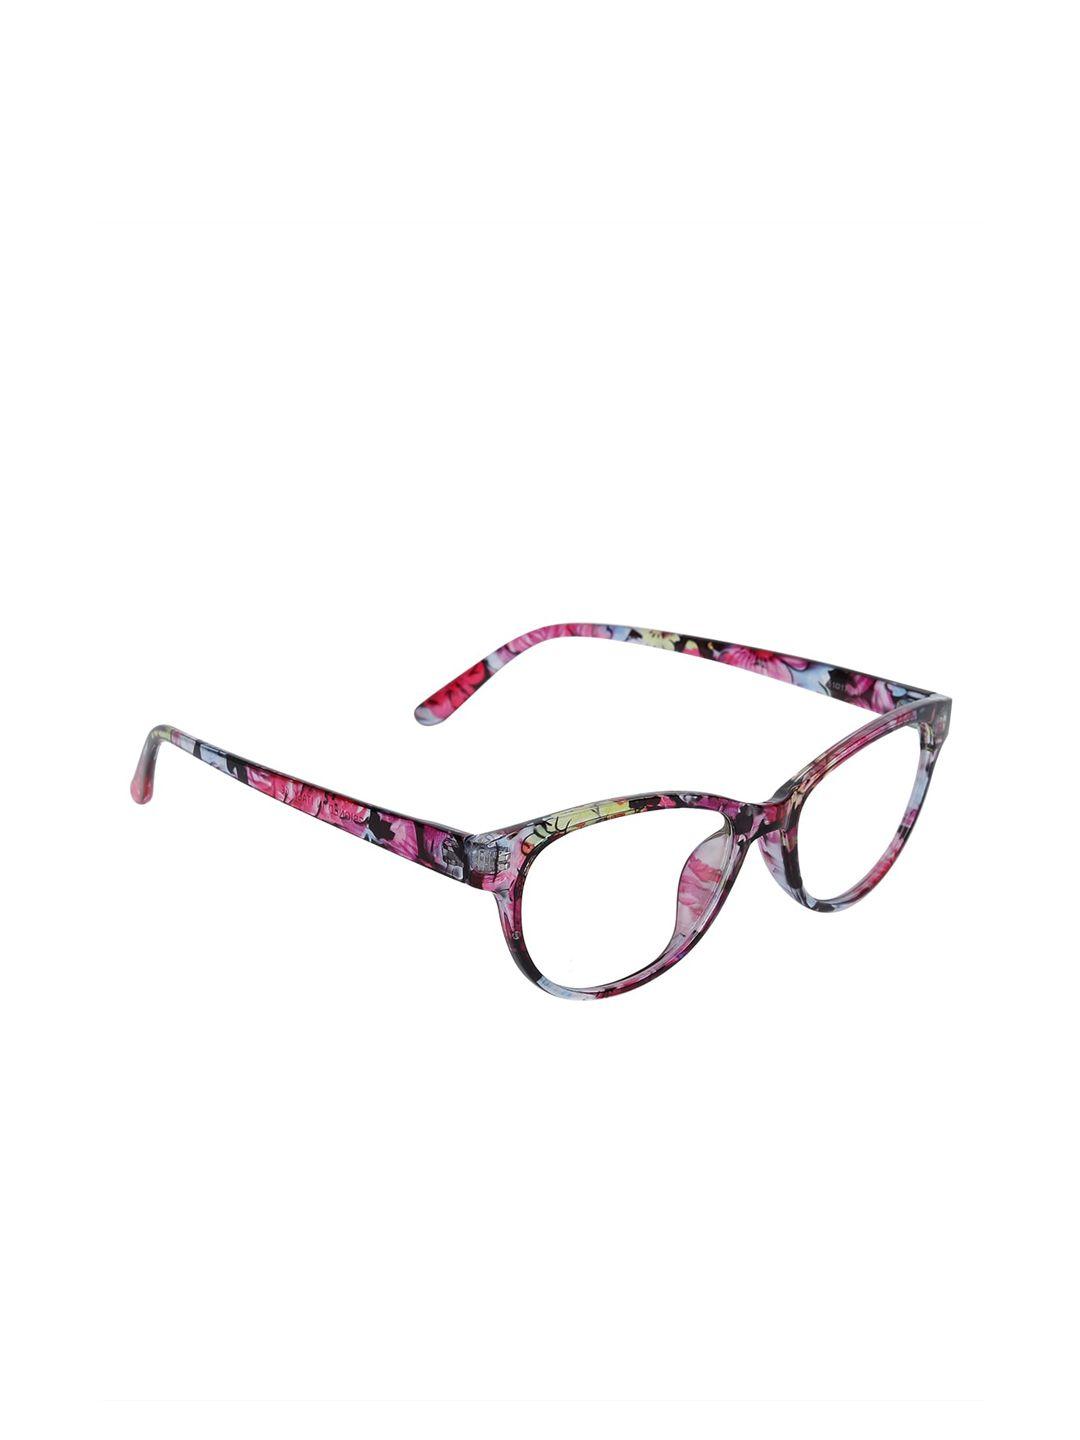 peter jones eyewear unisex black & pink printed medium anti glare cateye frames 2111-da1